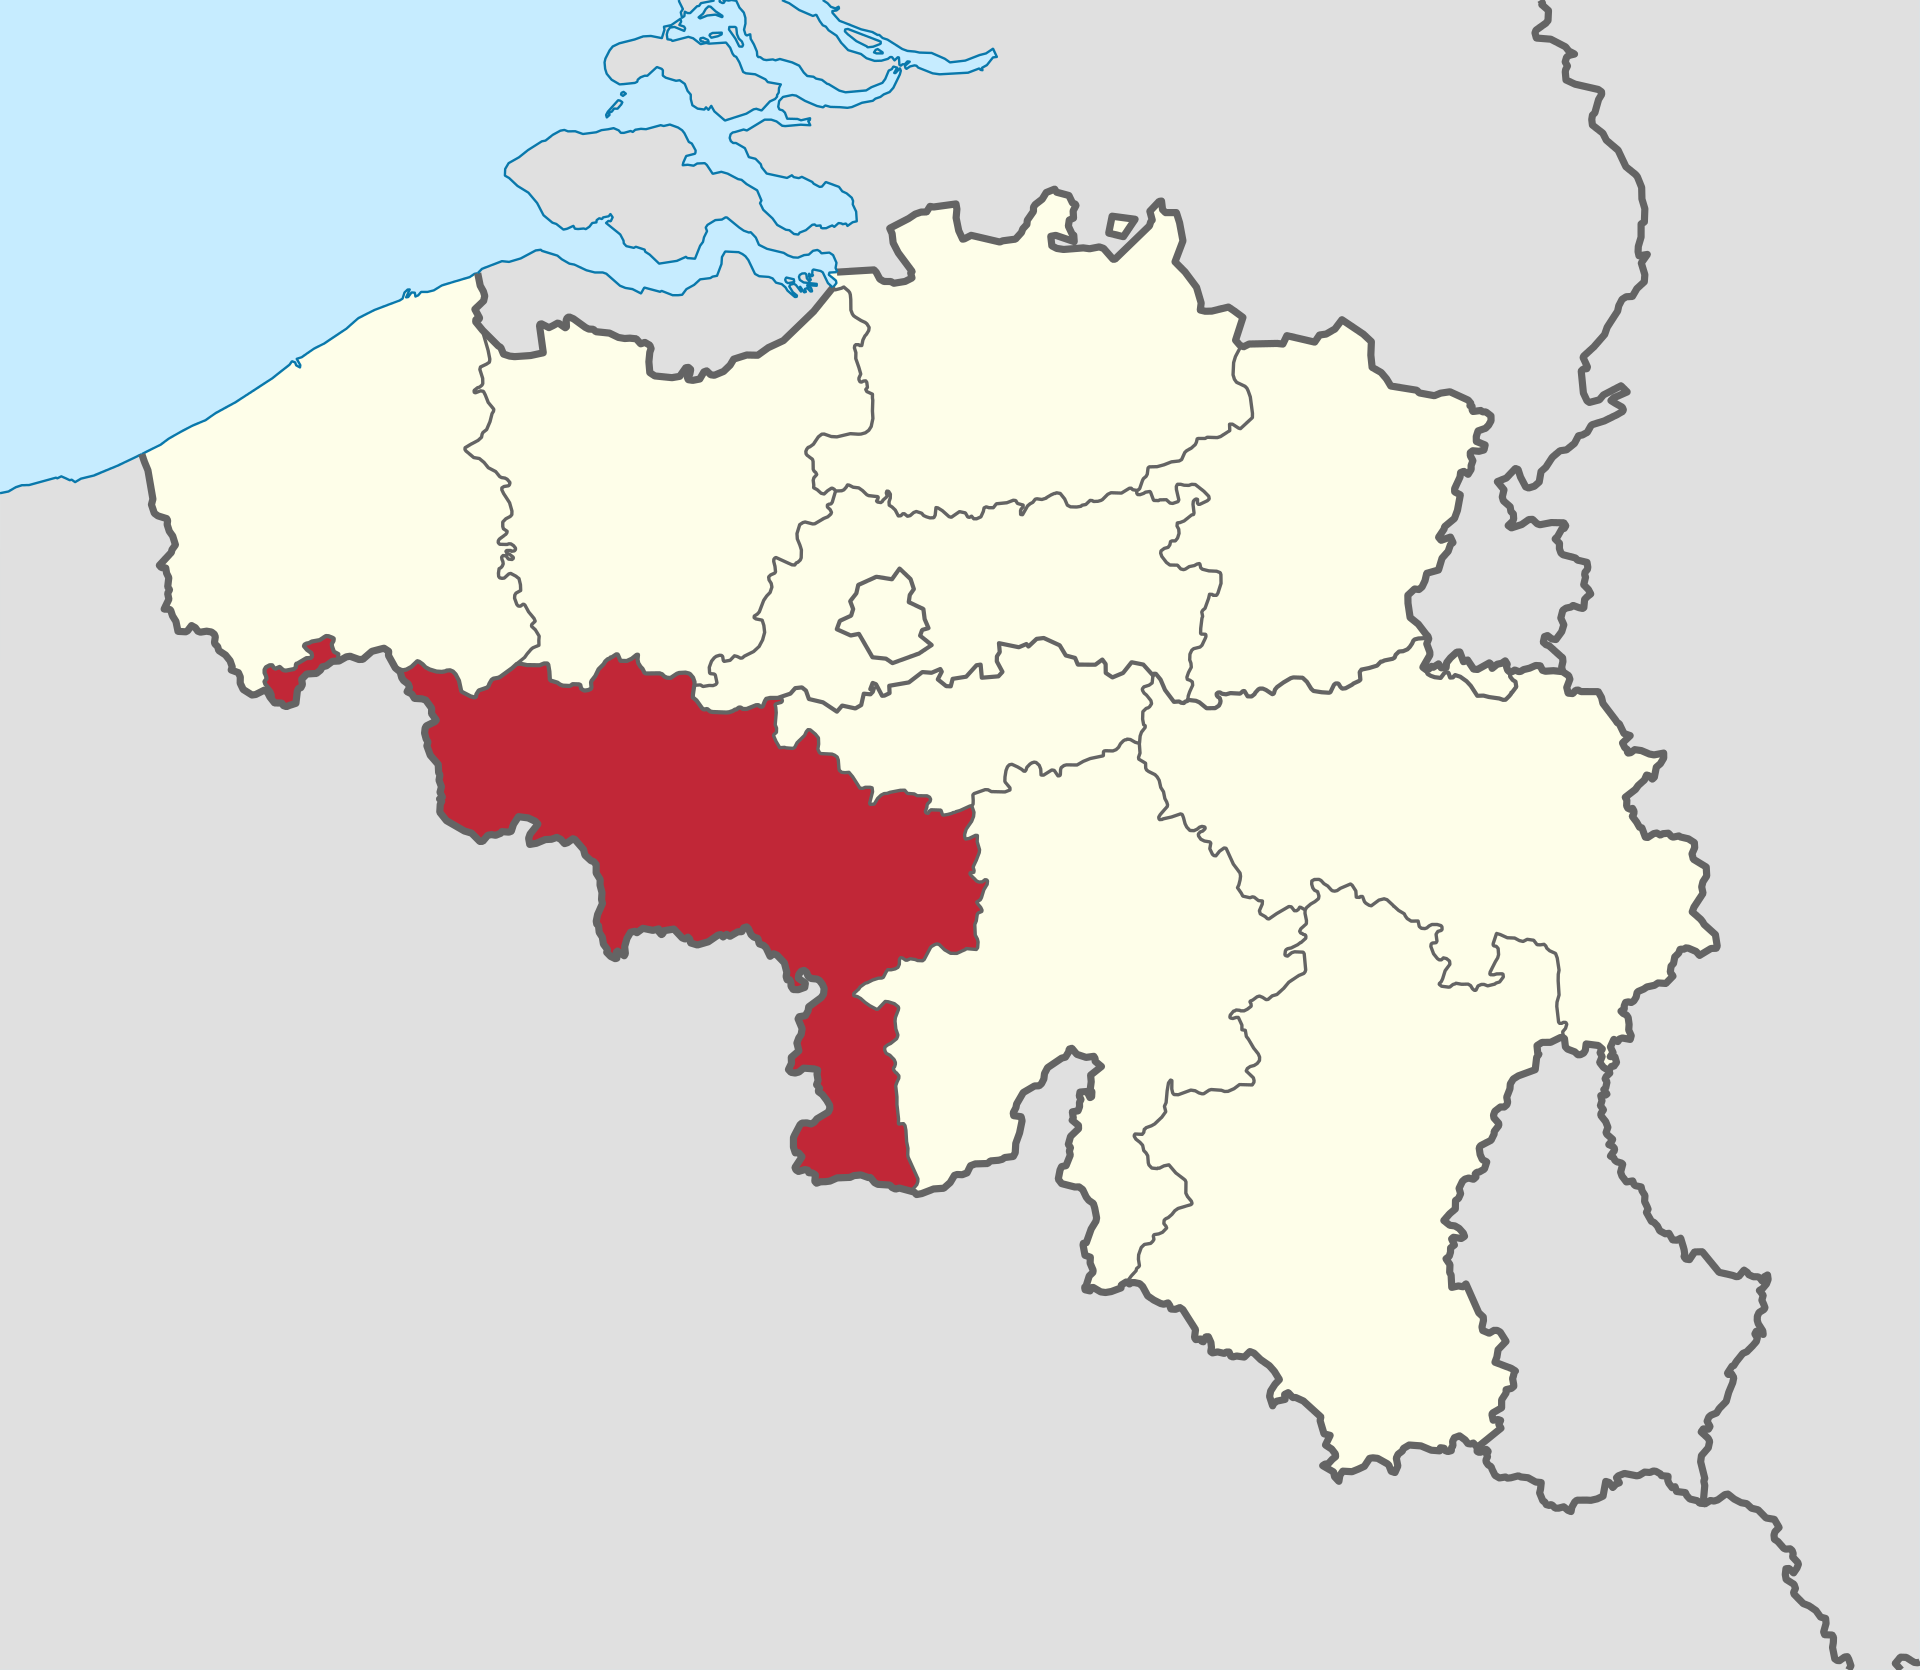 Couvent Des Soeurs Noires Urbex location or around the region Henegouwen (Waals Gewest), Belgium